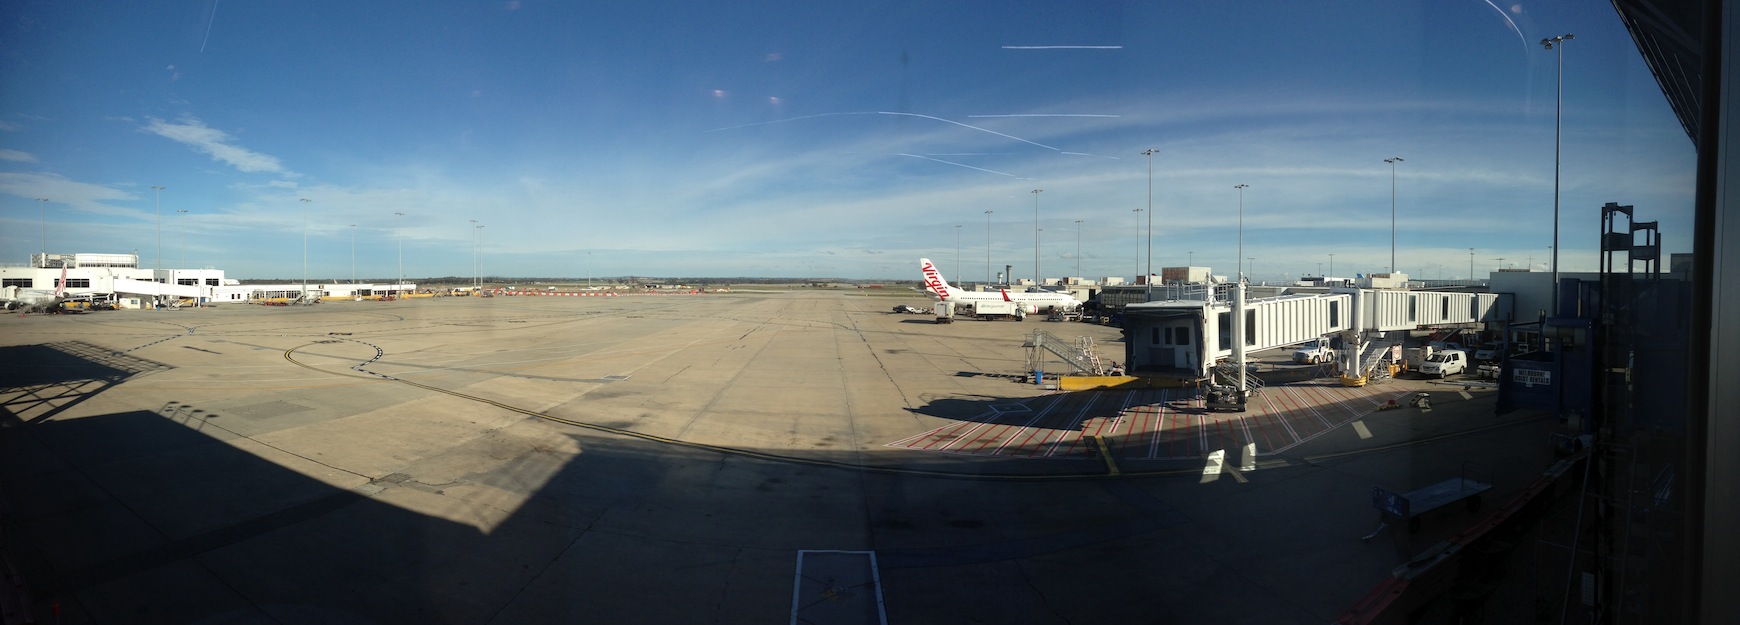 Virgin Australia Lounge Airport View